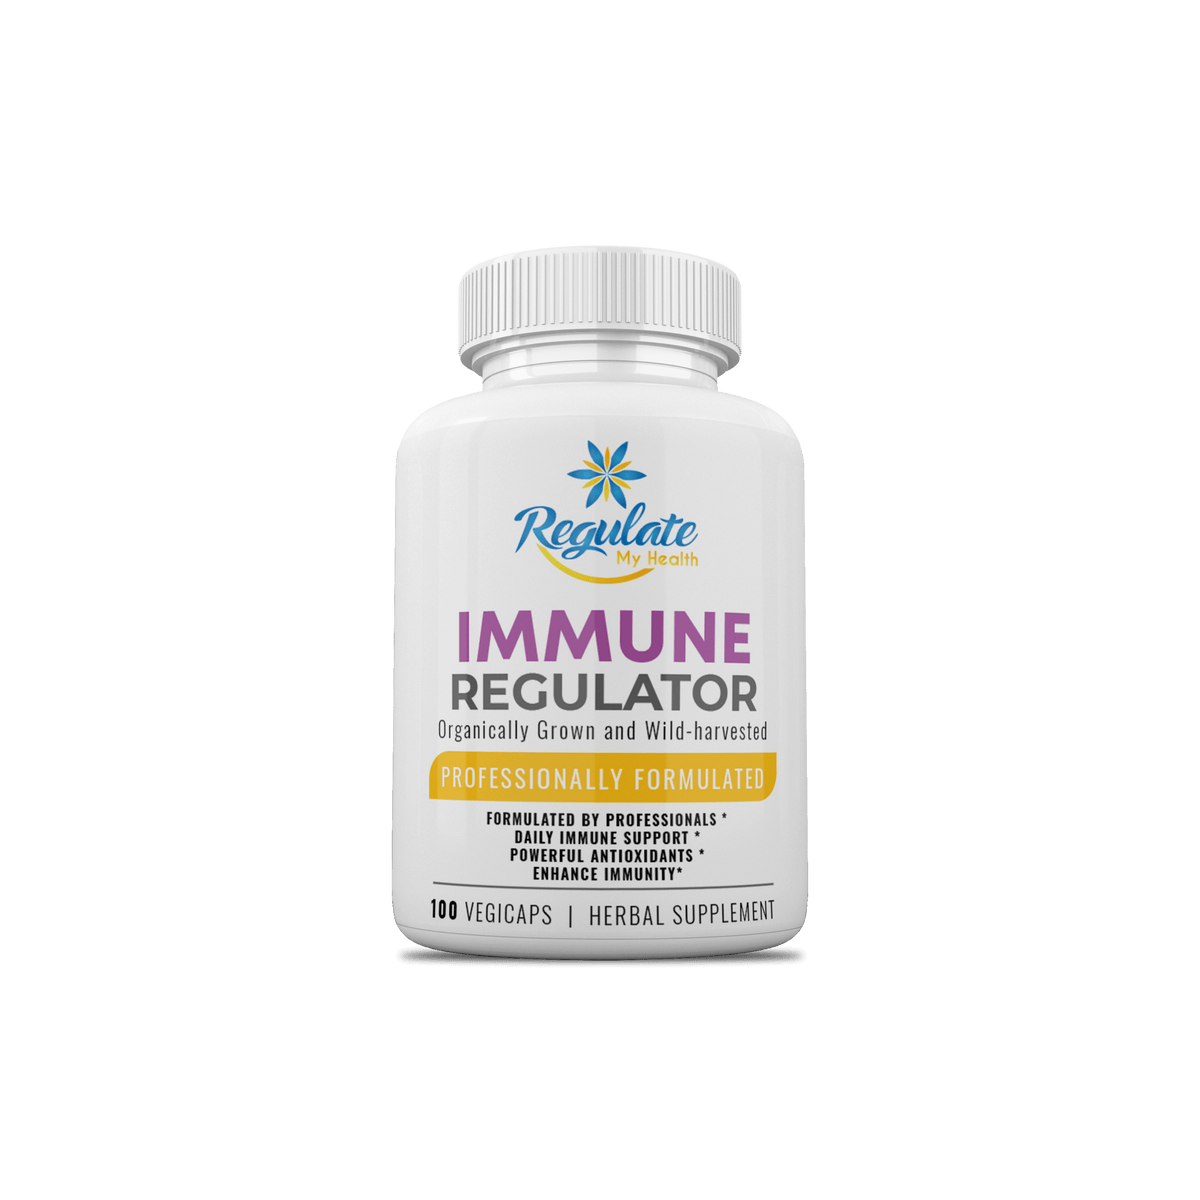 Immune Regulator